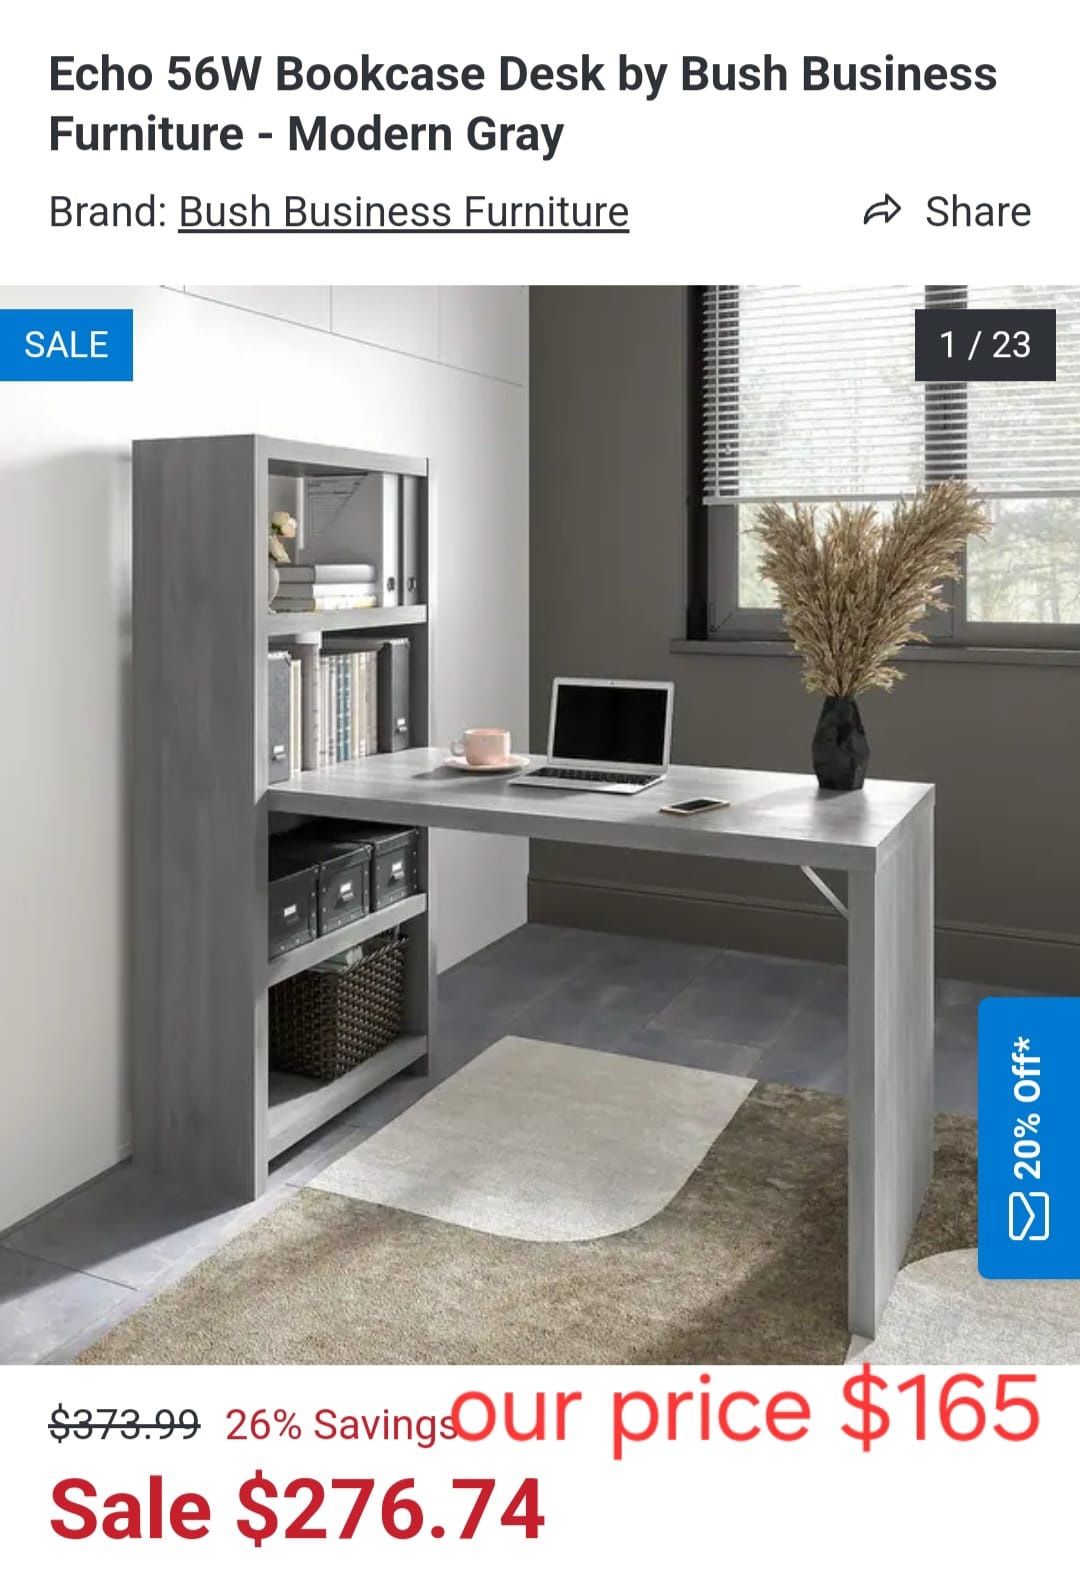 Echo 56W Bookcase Desk by Bush Business Furniture - Modern Gray